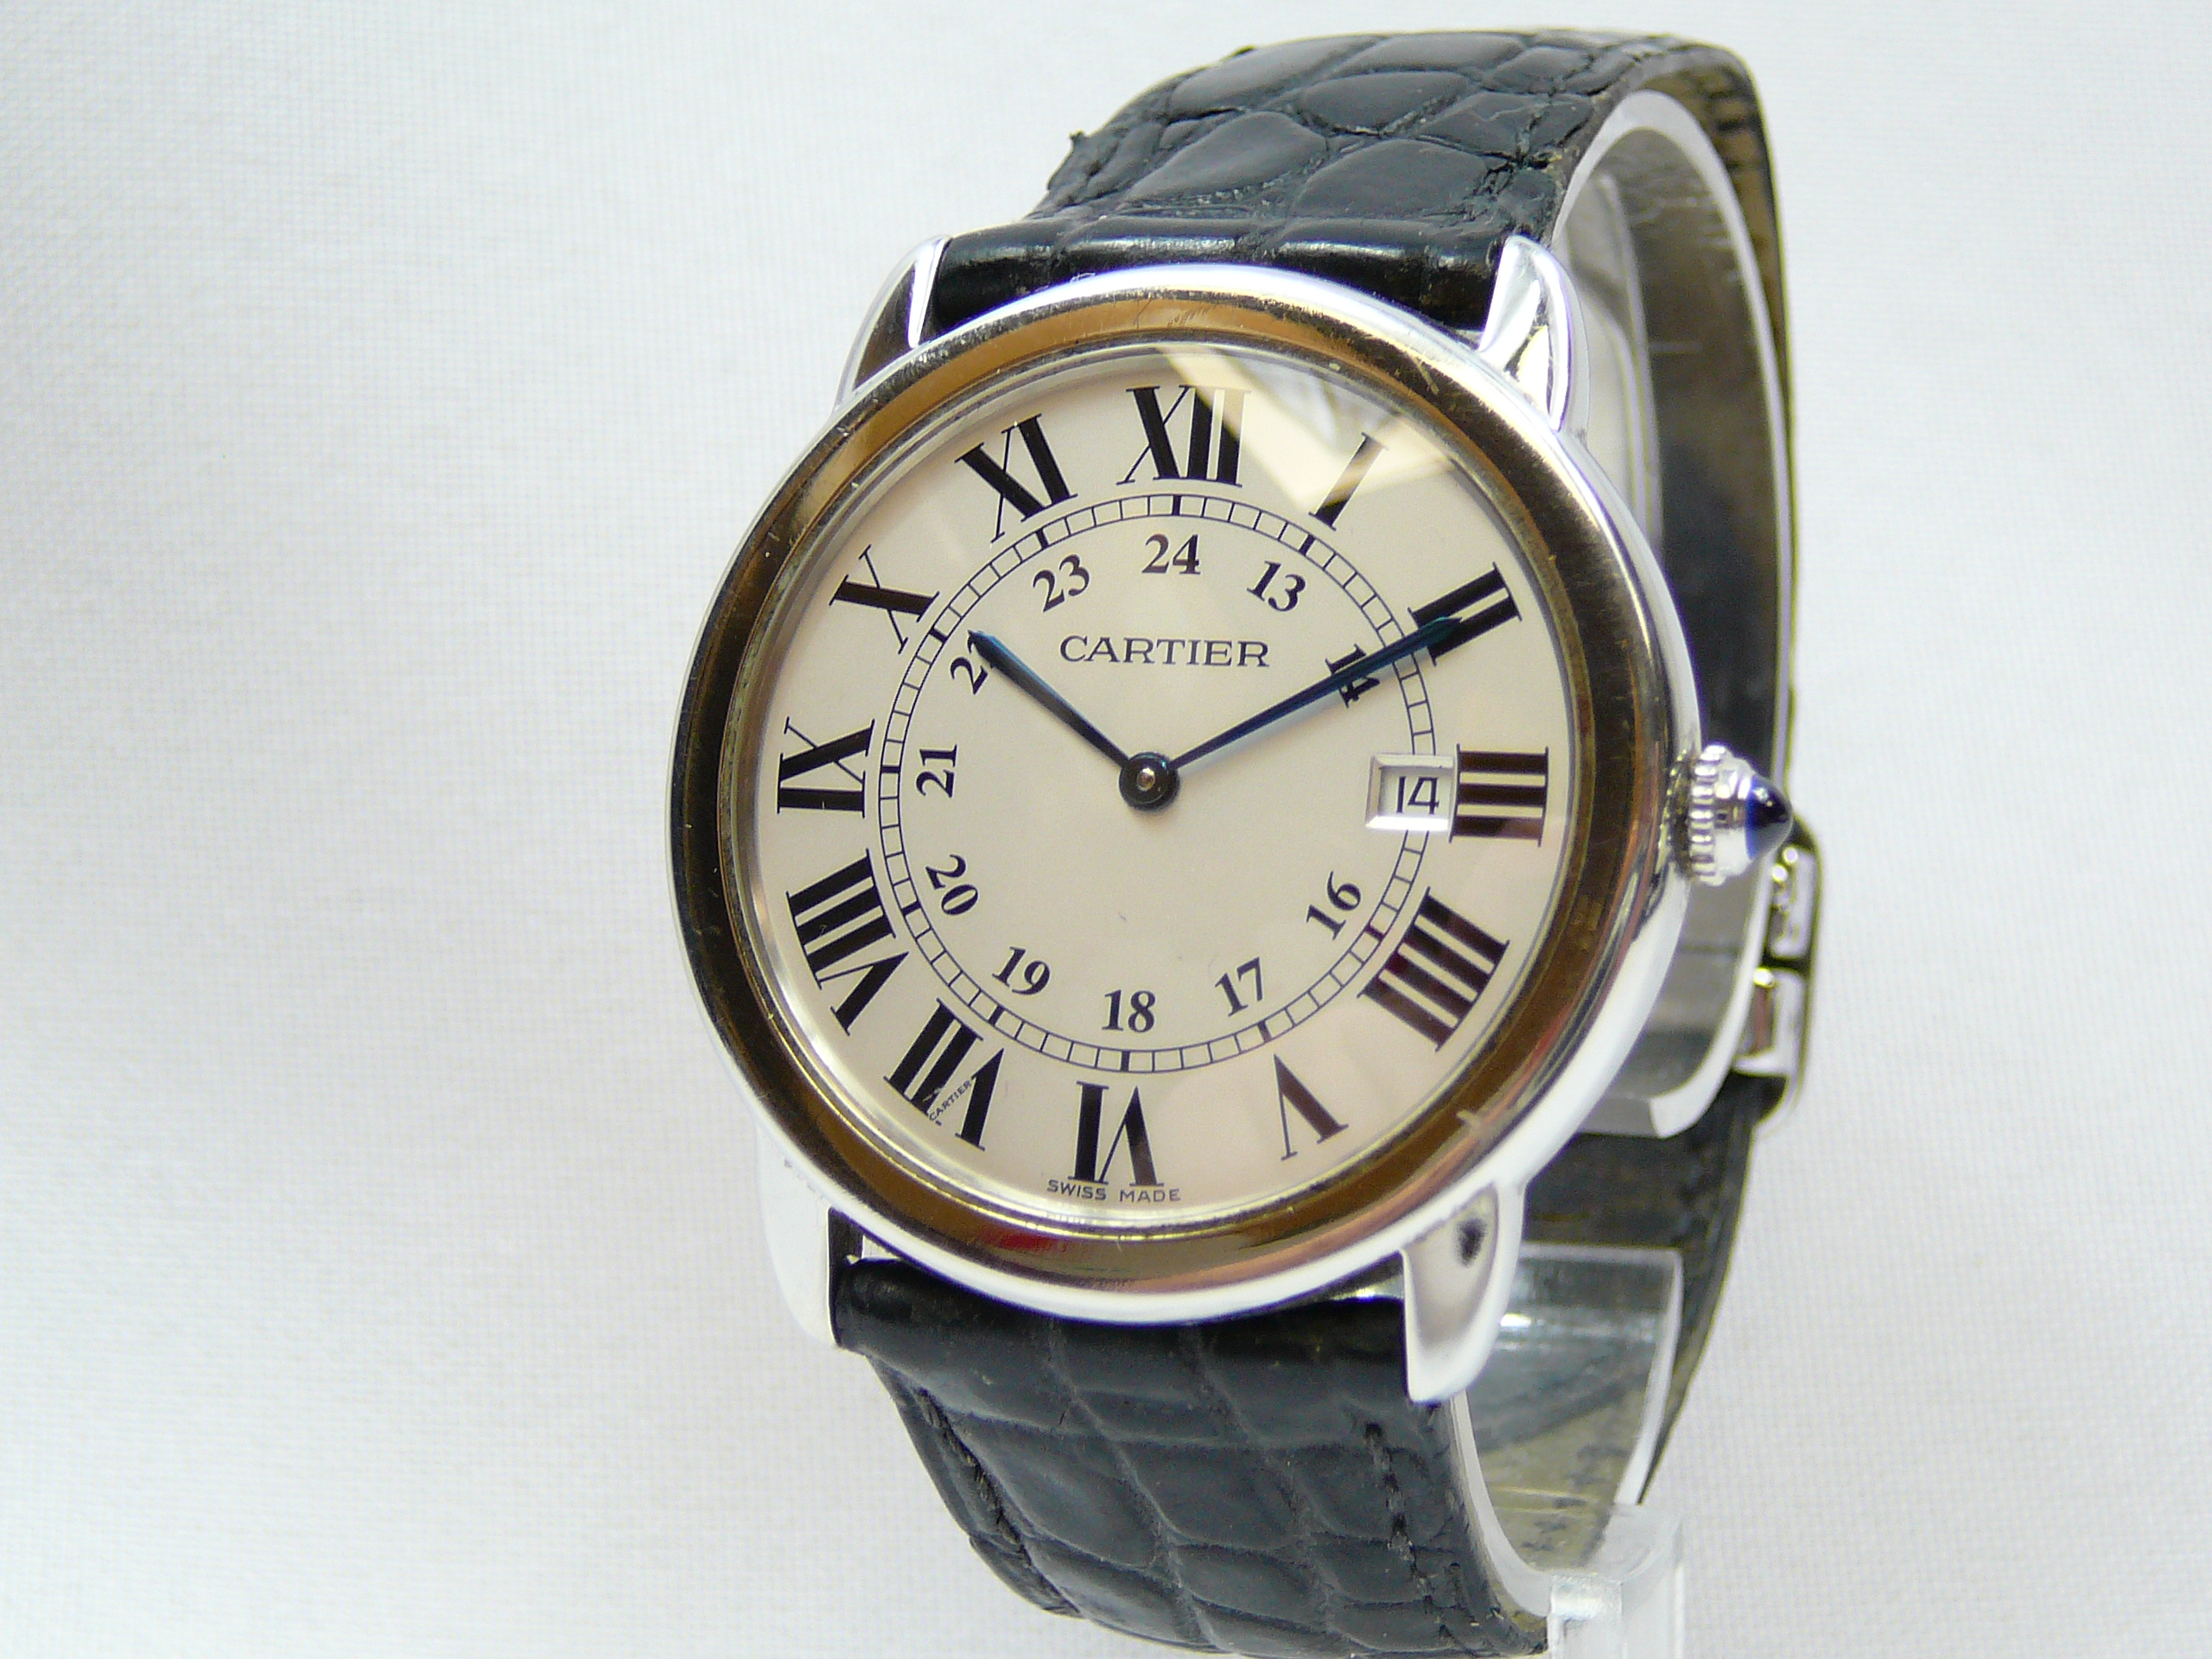 Gents Cartier Wristwatch - Image 2 of 3